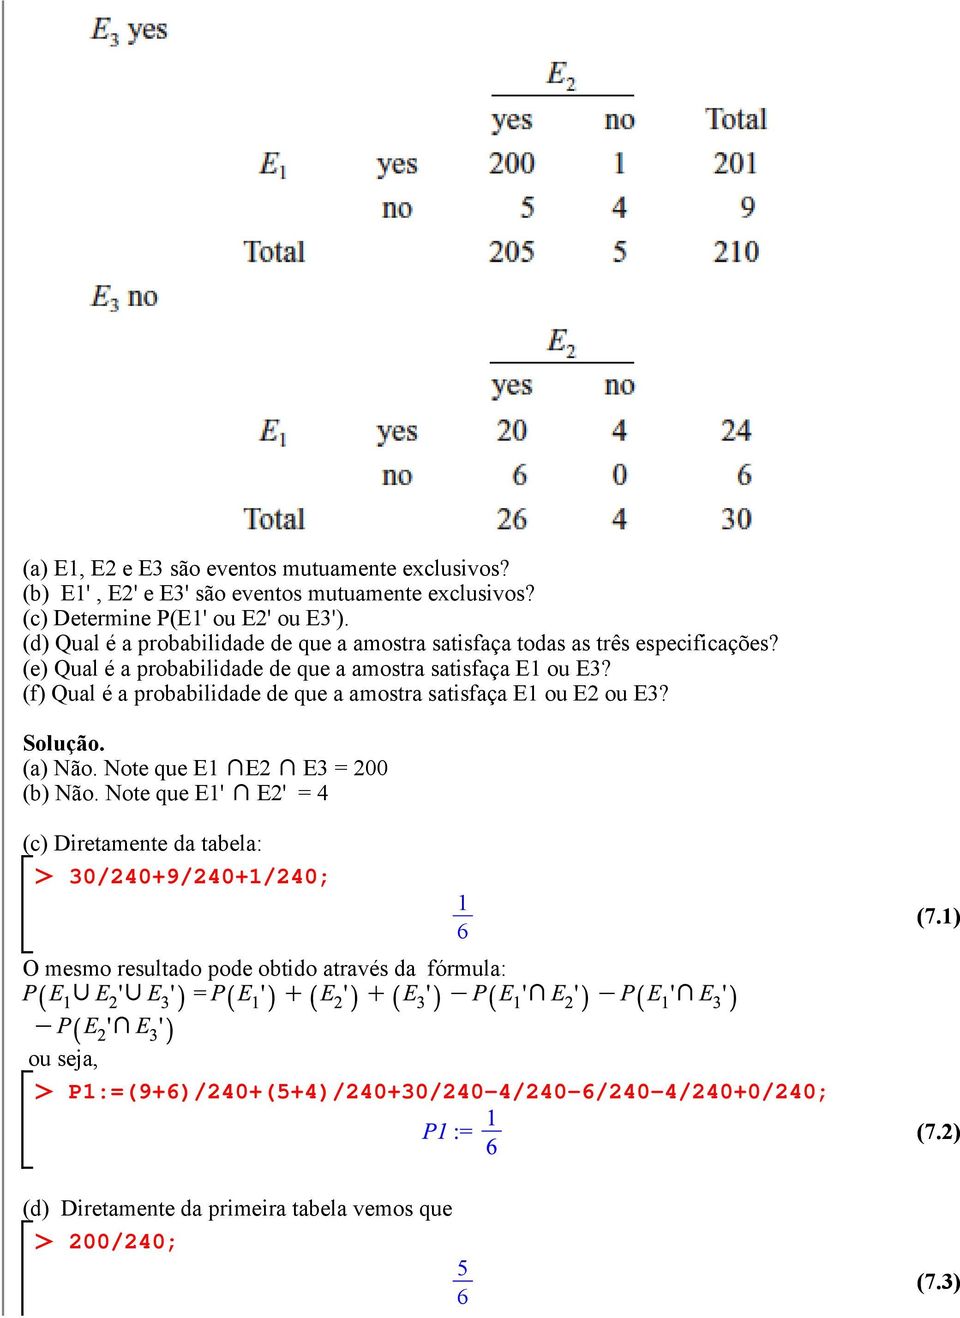 (f) Qual é a probabilidade de que a amostra satisfaça E1 ou E2 ou E3? (a) Não. Note que E1 XE2 X E3 = 200 (b) Não.